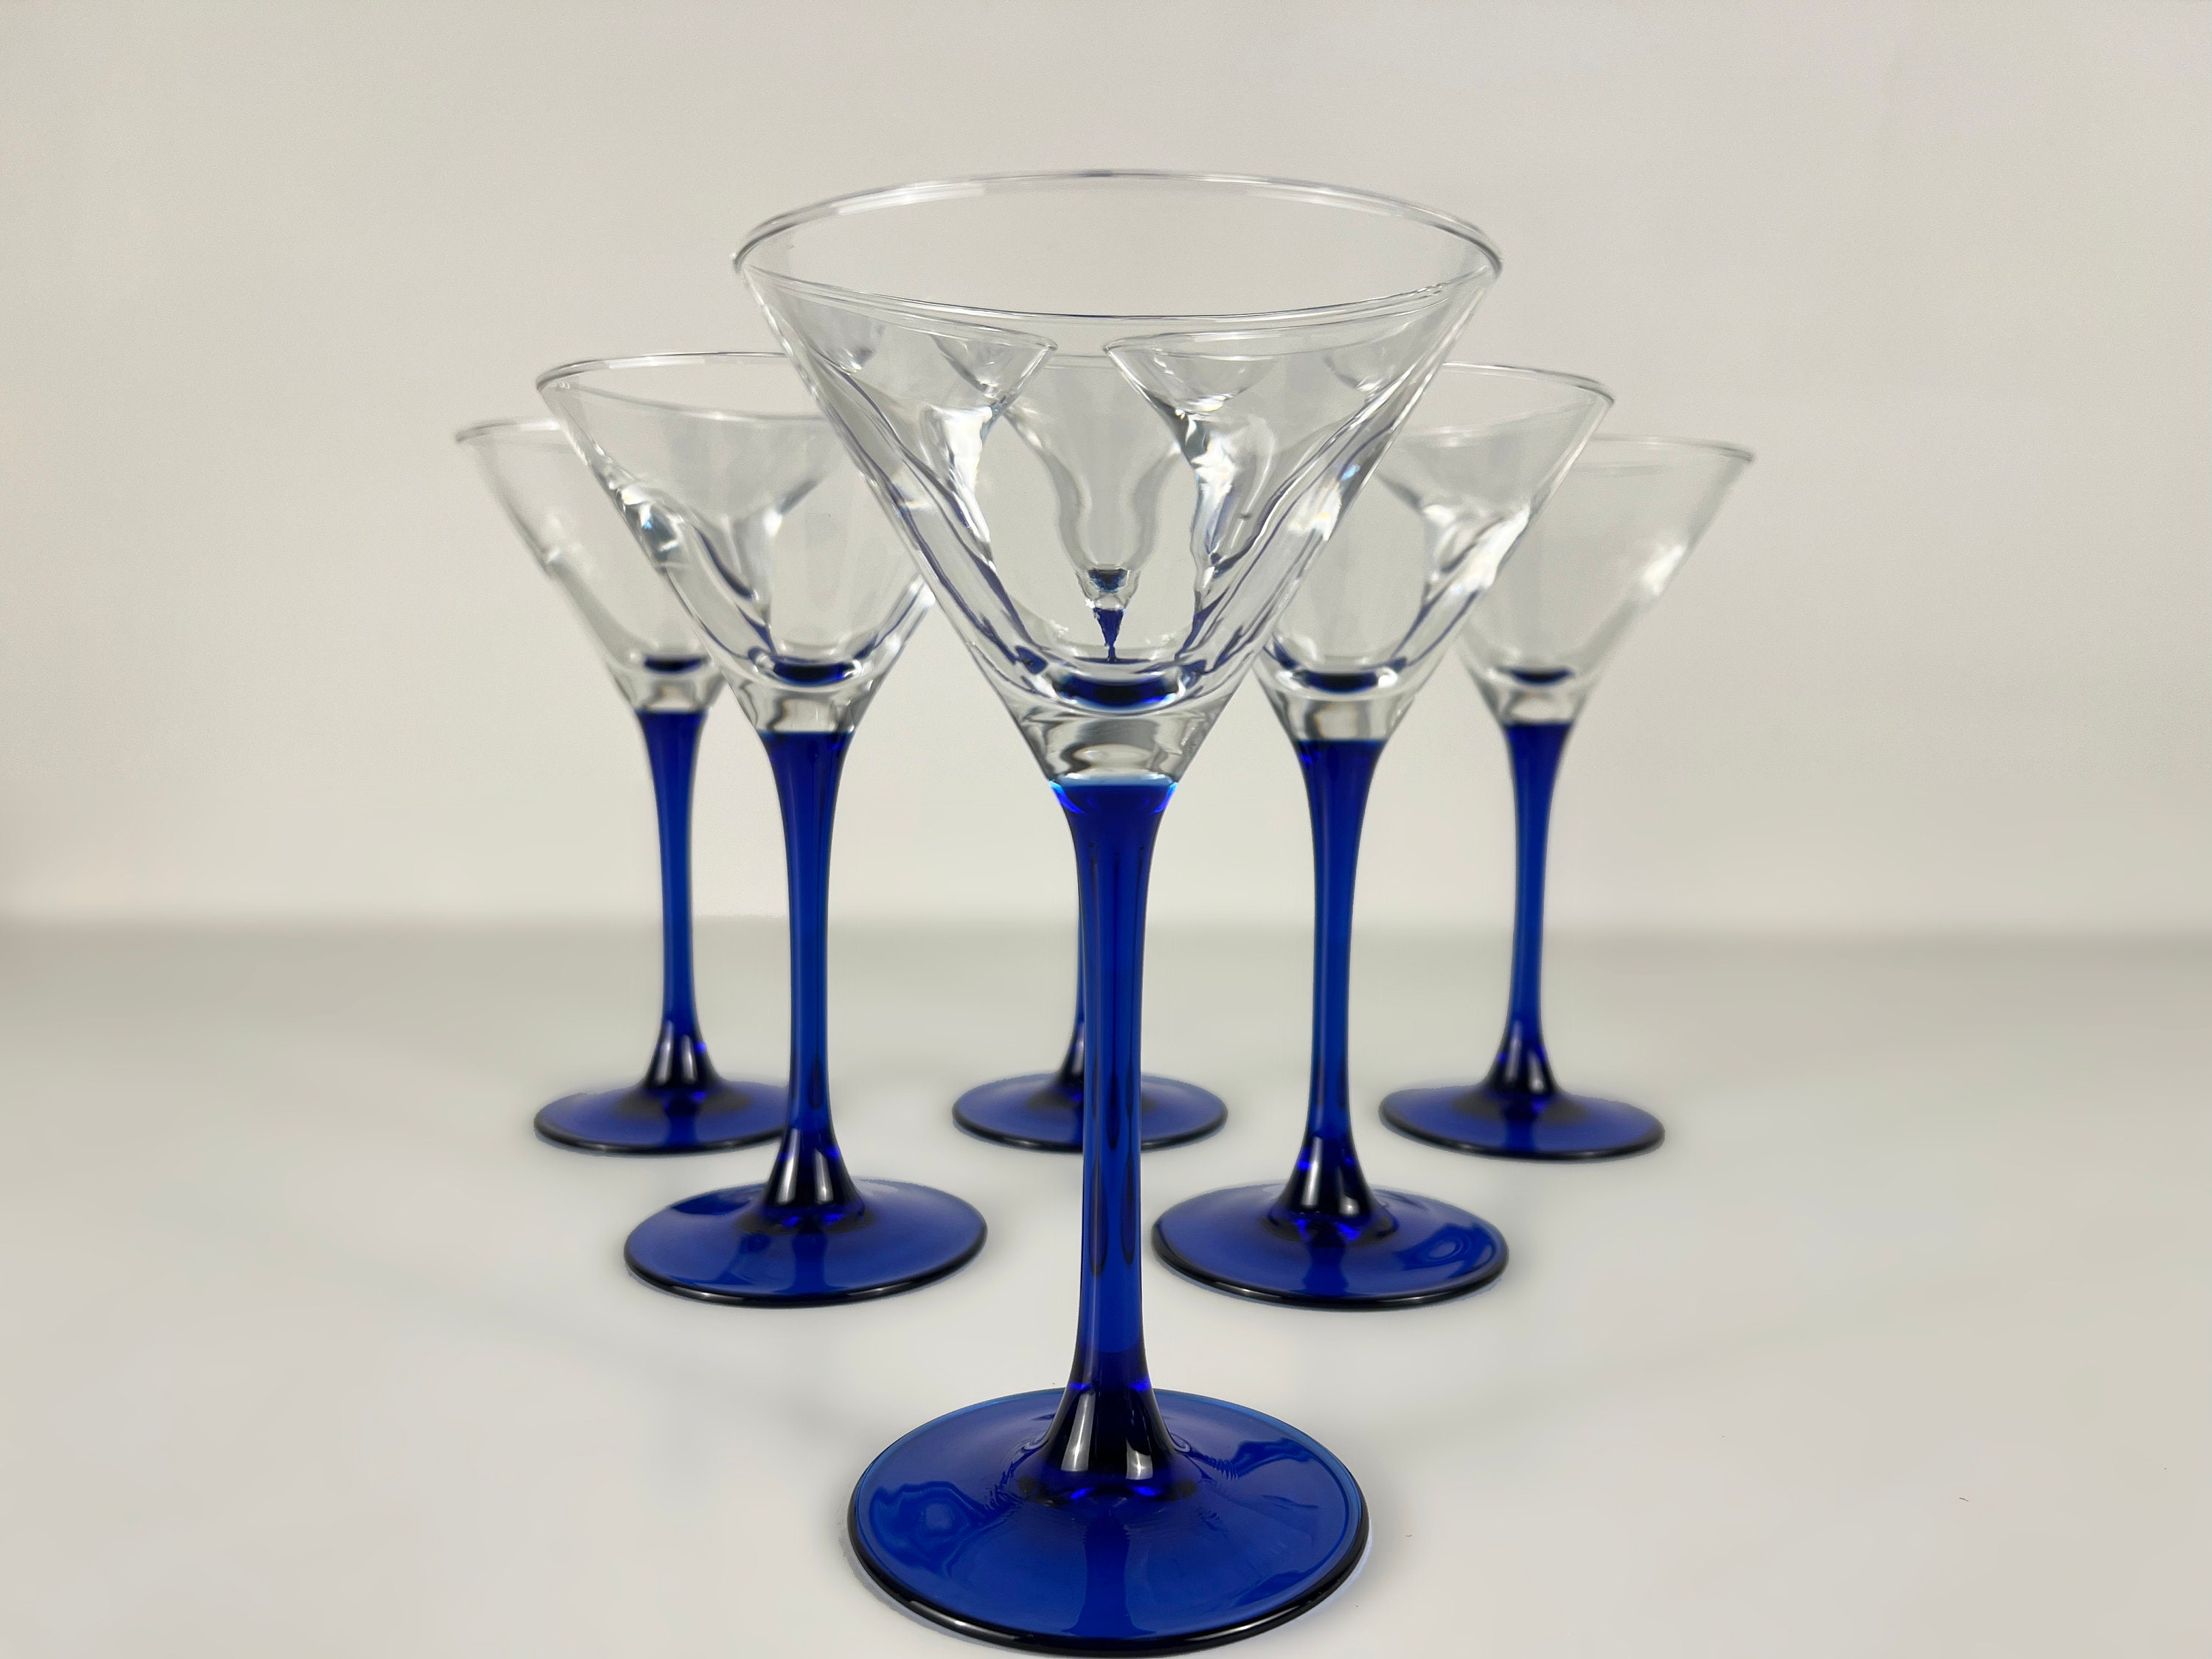 2) LUMINARC SMALL MARTINI GLASSES w/COBALT BLUE STEM